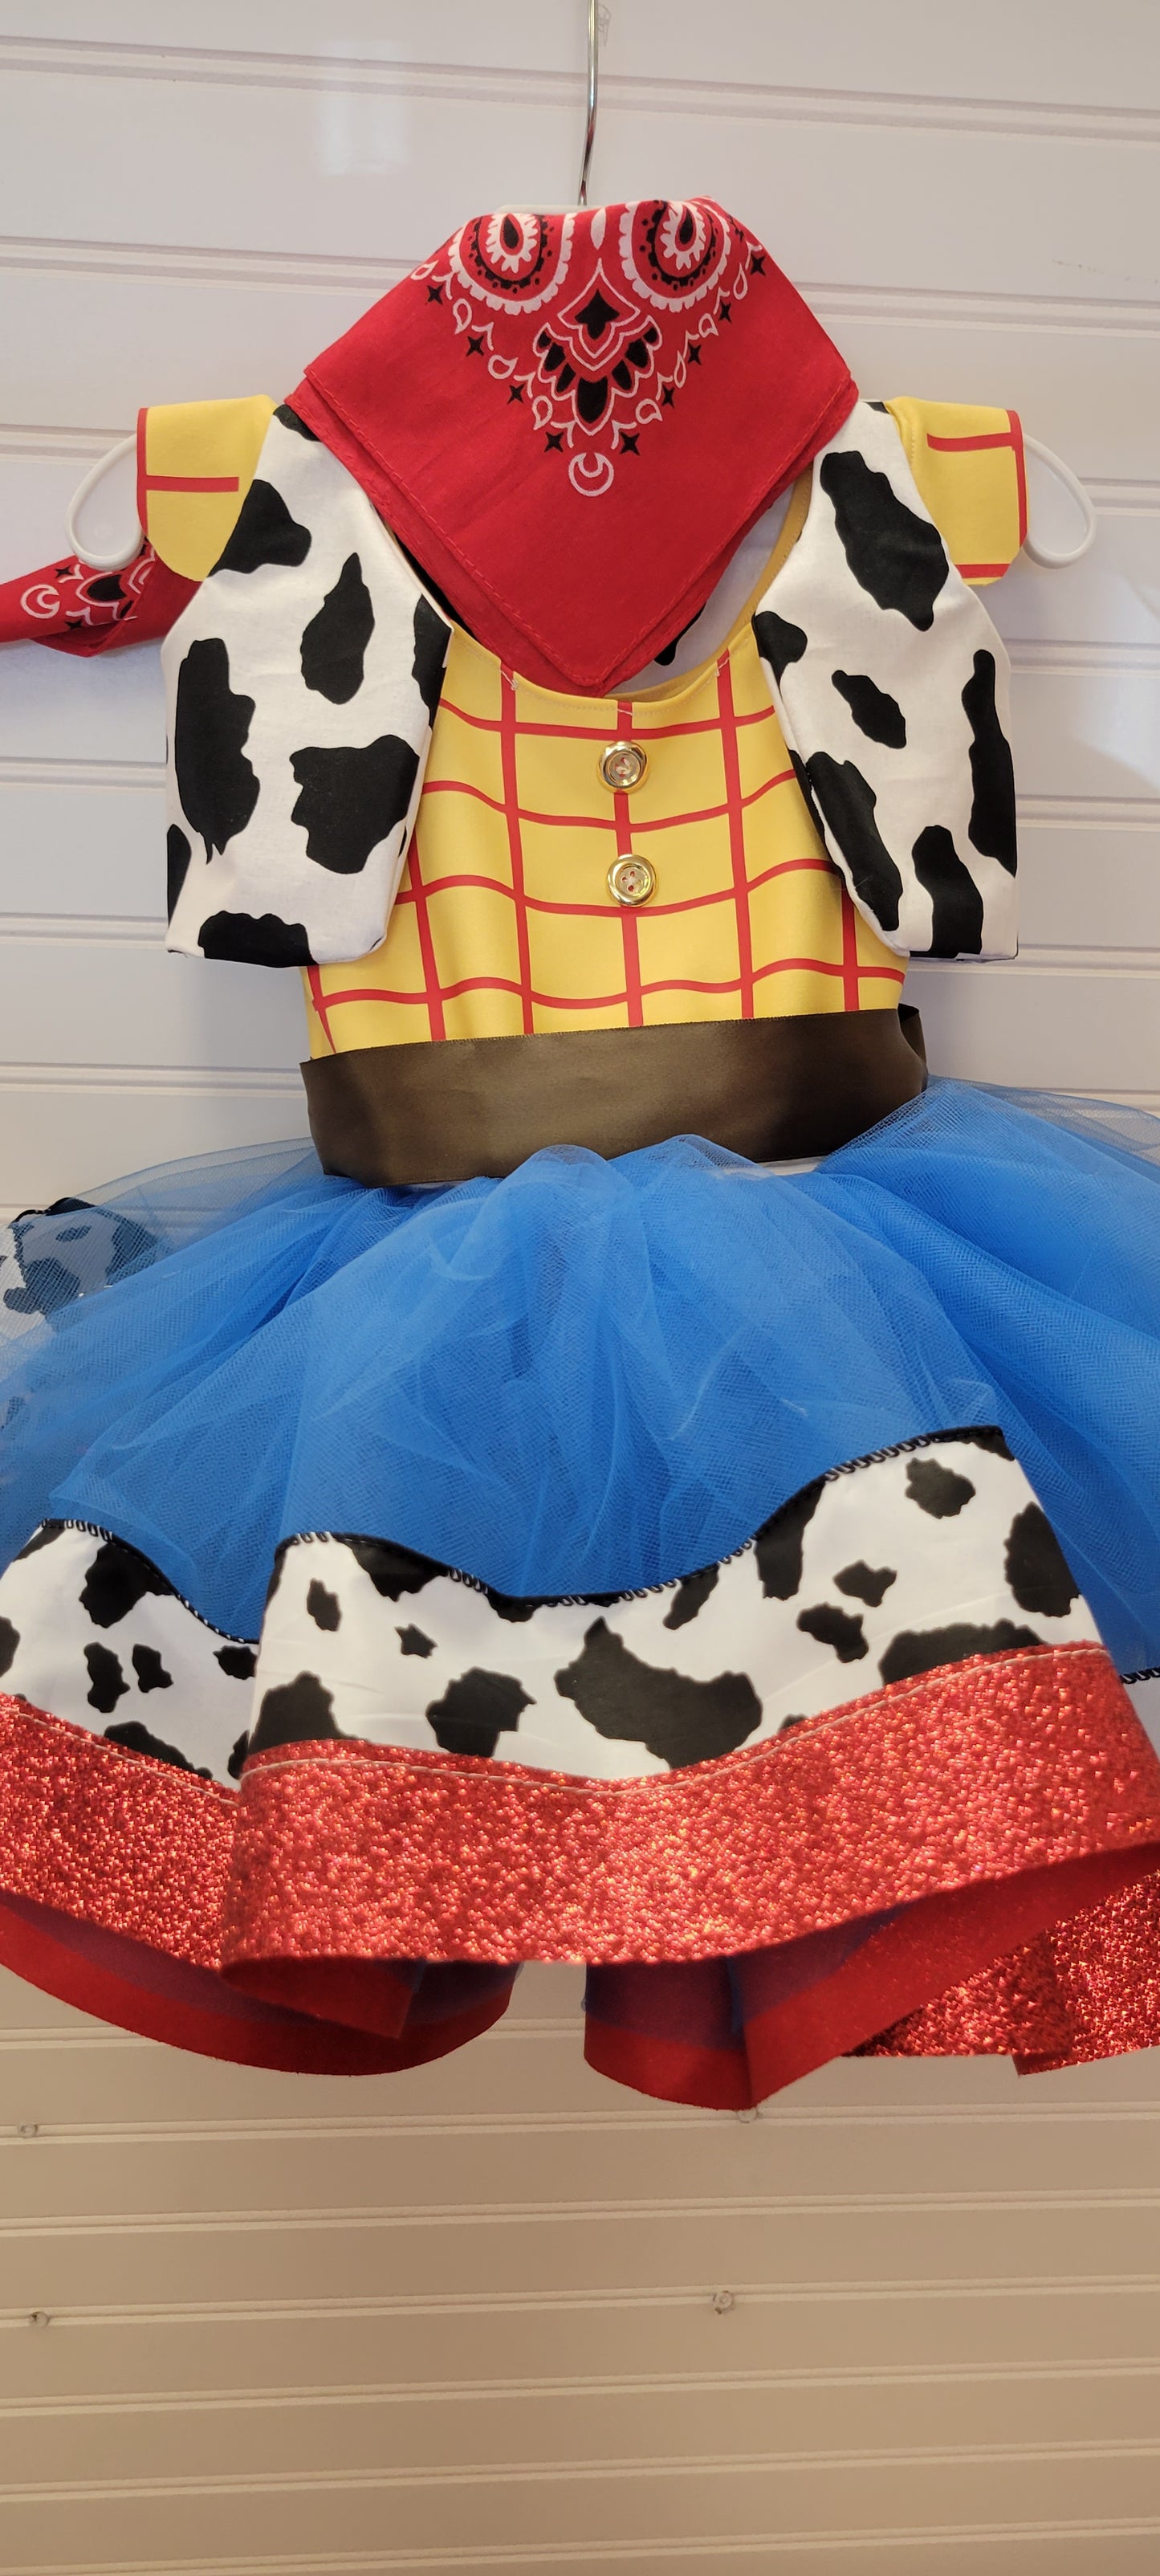 Jessie Toy Story inspired Birthday dress